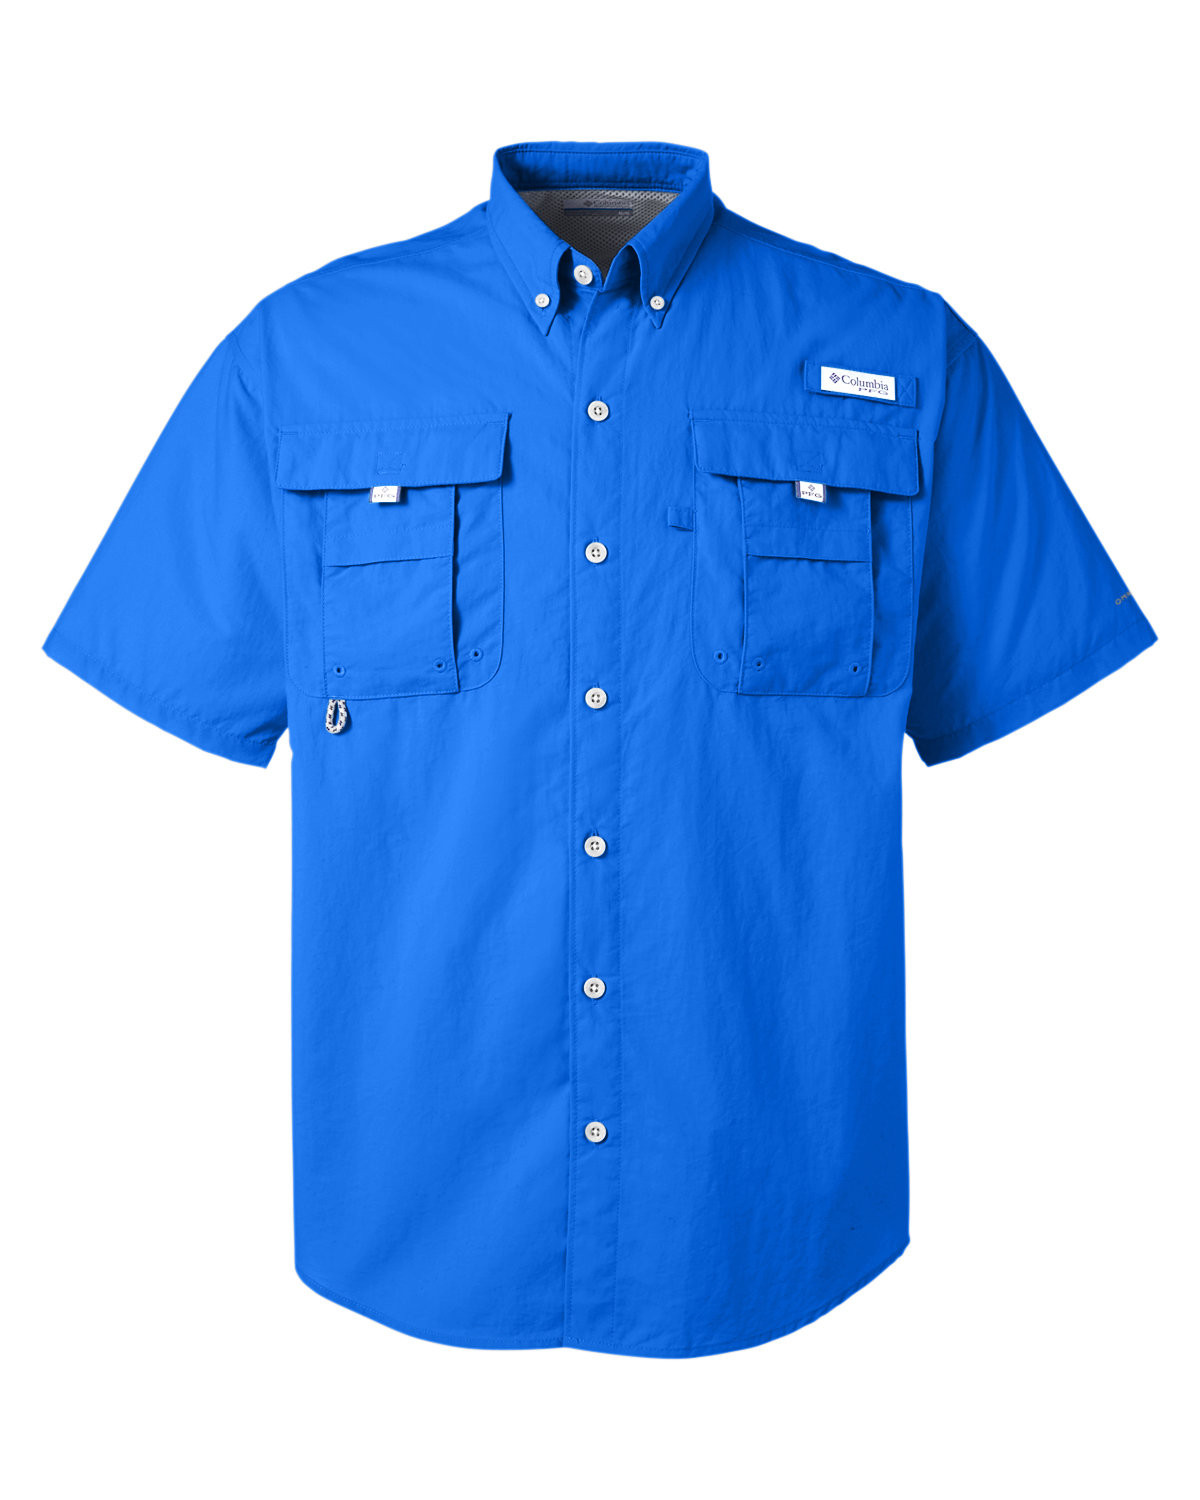 Columbia 7047 - Men's Bahama II Short-Sleeve Shirt - VIVID BLUE - XL